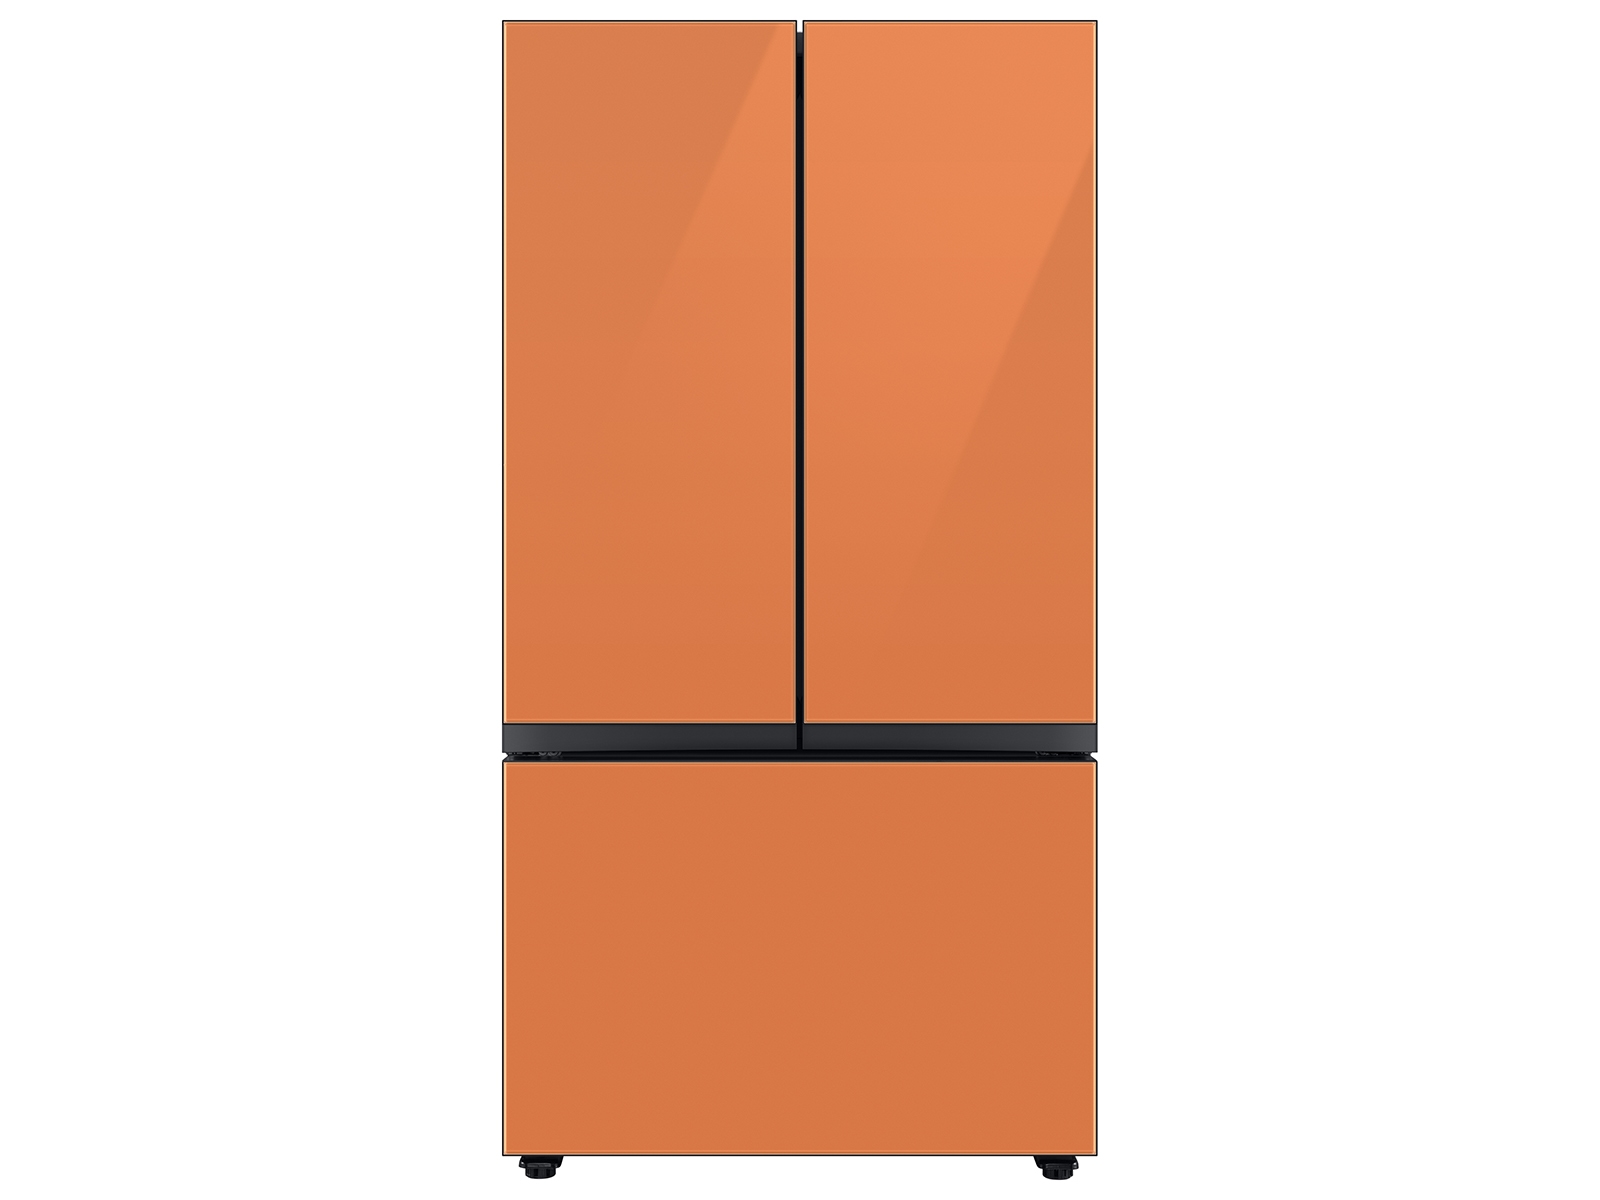 Samsung Bespoke 3-Door French Door Refrigerator (24 cu. ft.) with AutoFill Water Pitcher in Clementine Glass(BNDL-1650467500779)